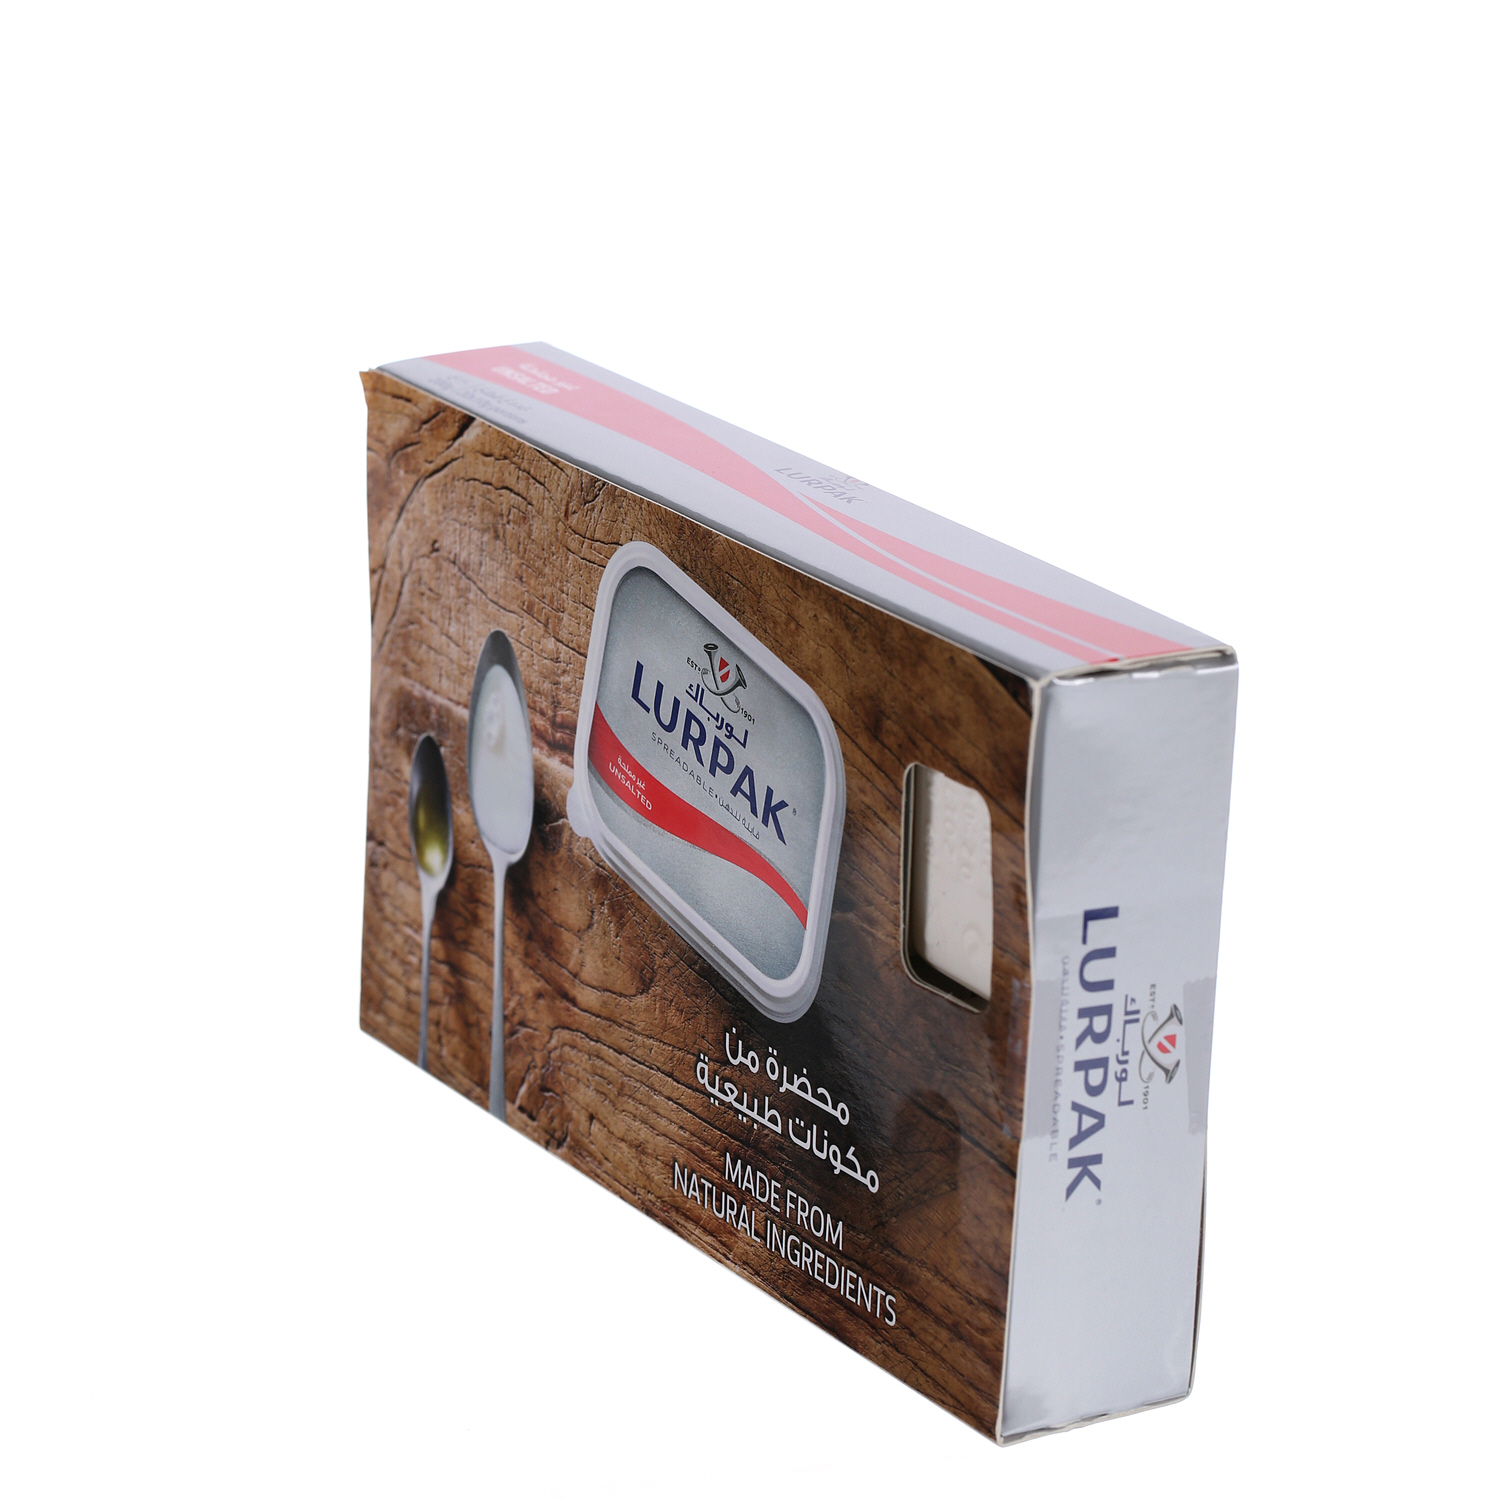 Lurpak Butter Spreadable Unsalted 10 g × 20 Pack